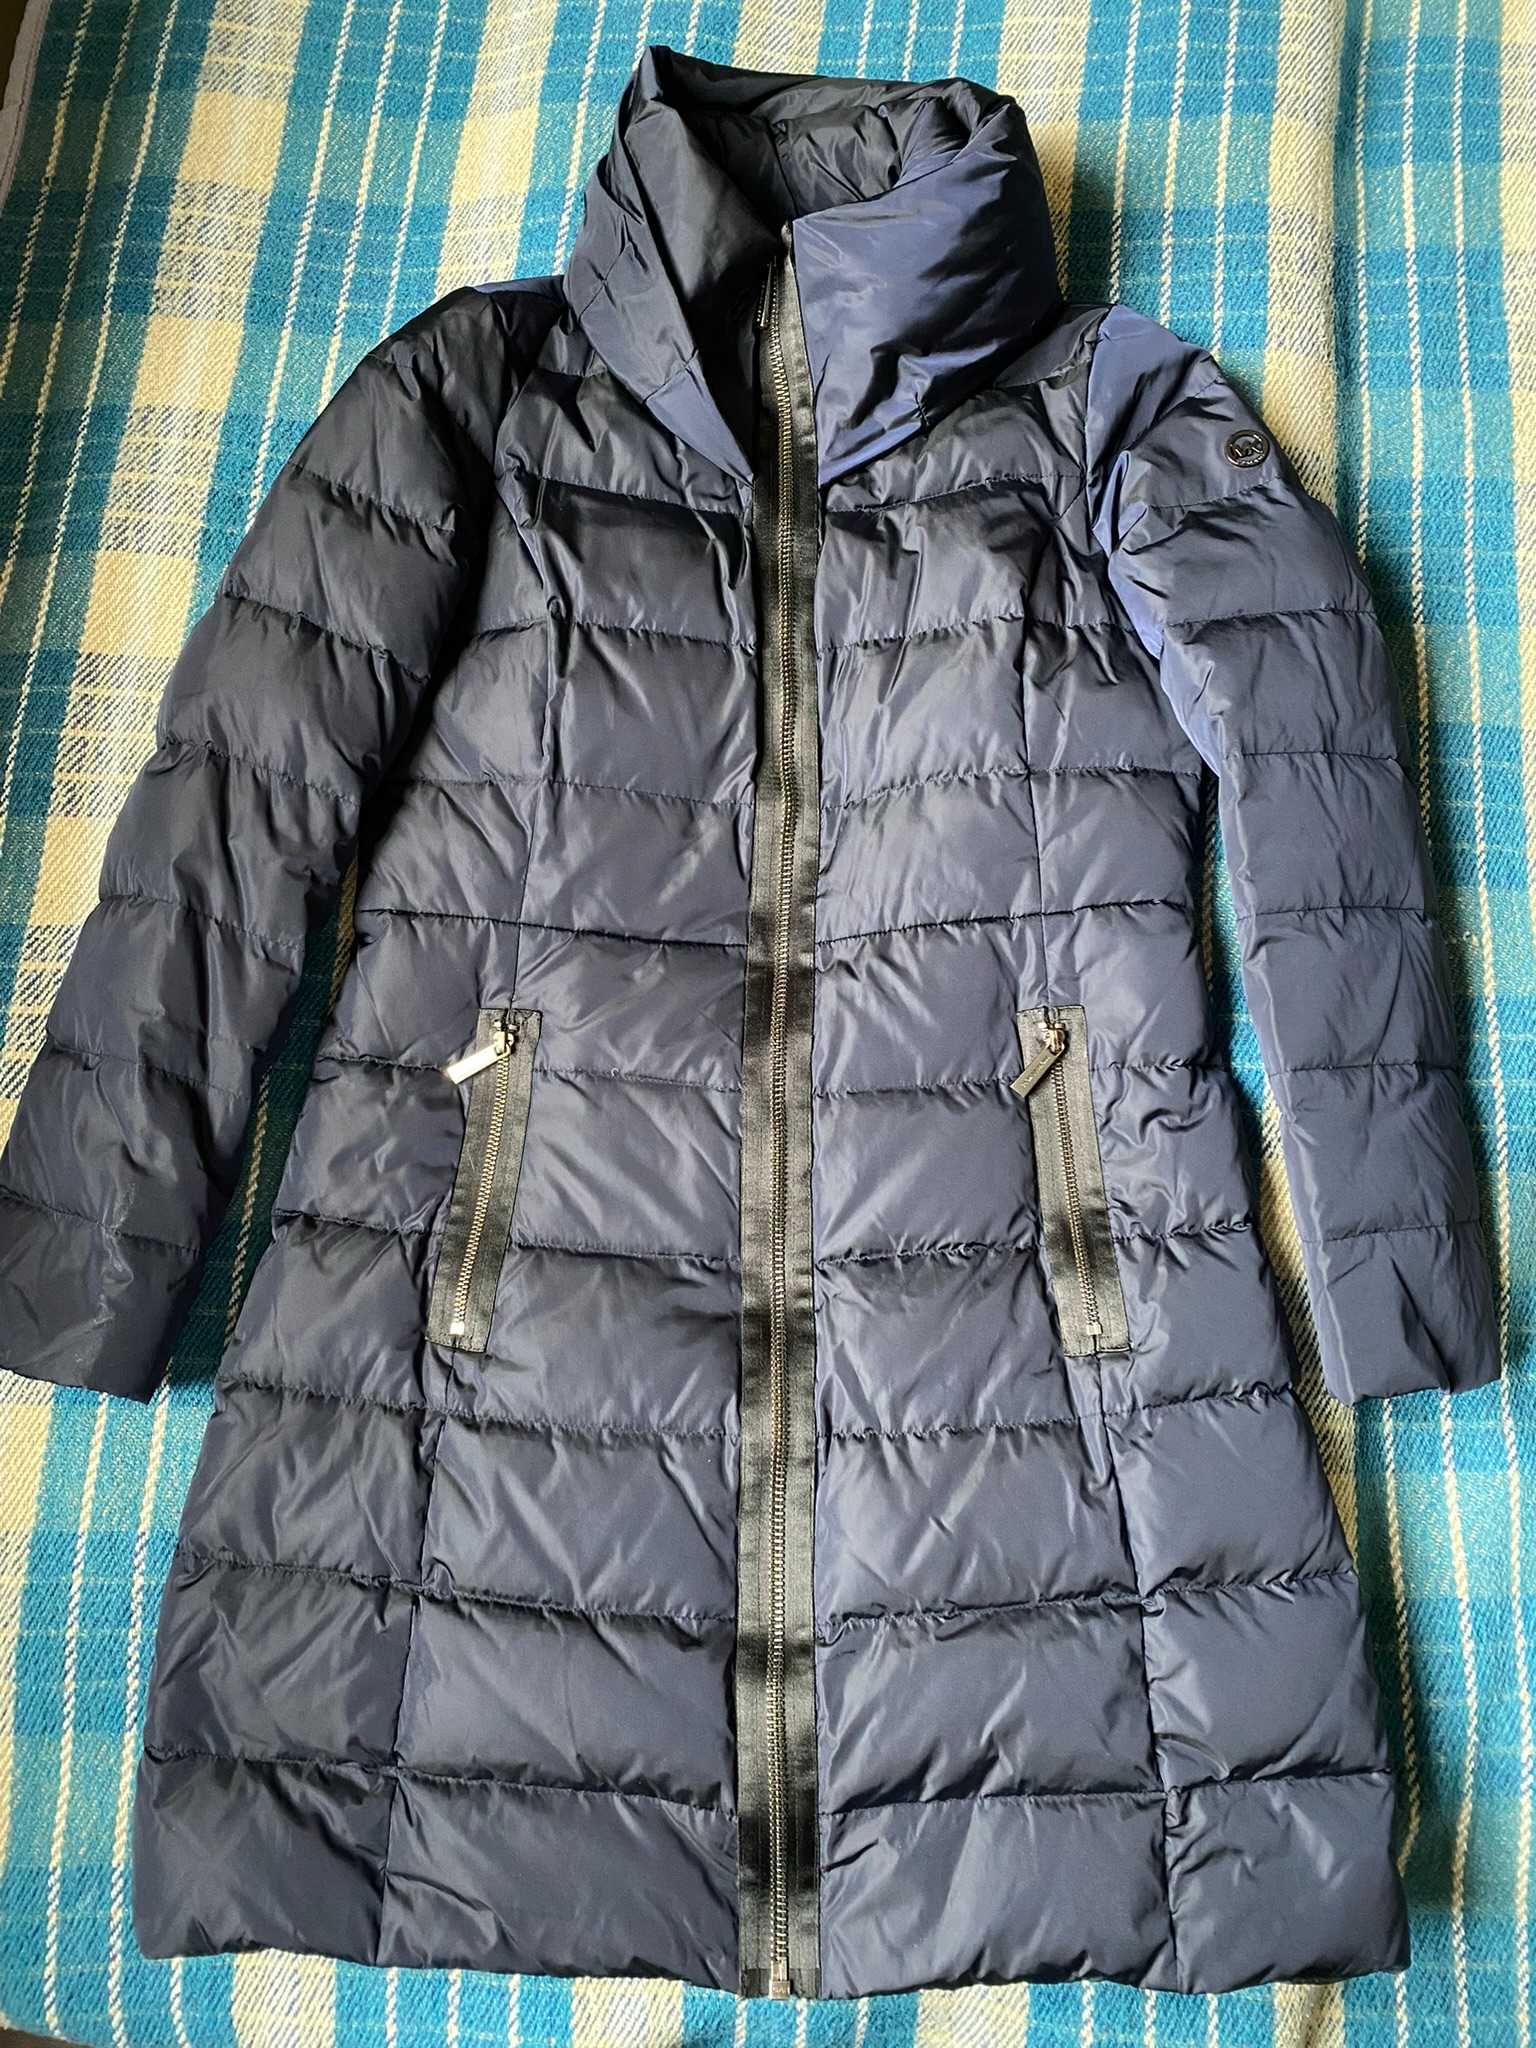 Michael Kors Quilted-Nylon Down Coat oryginalny płaszcz kutrka puchowa